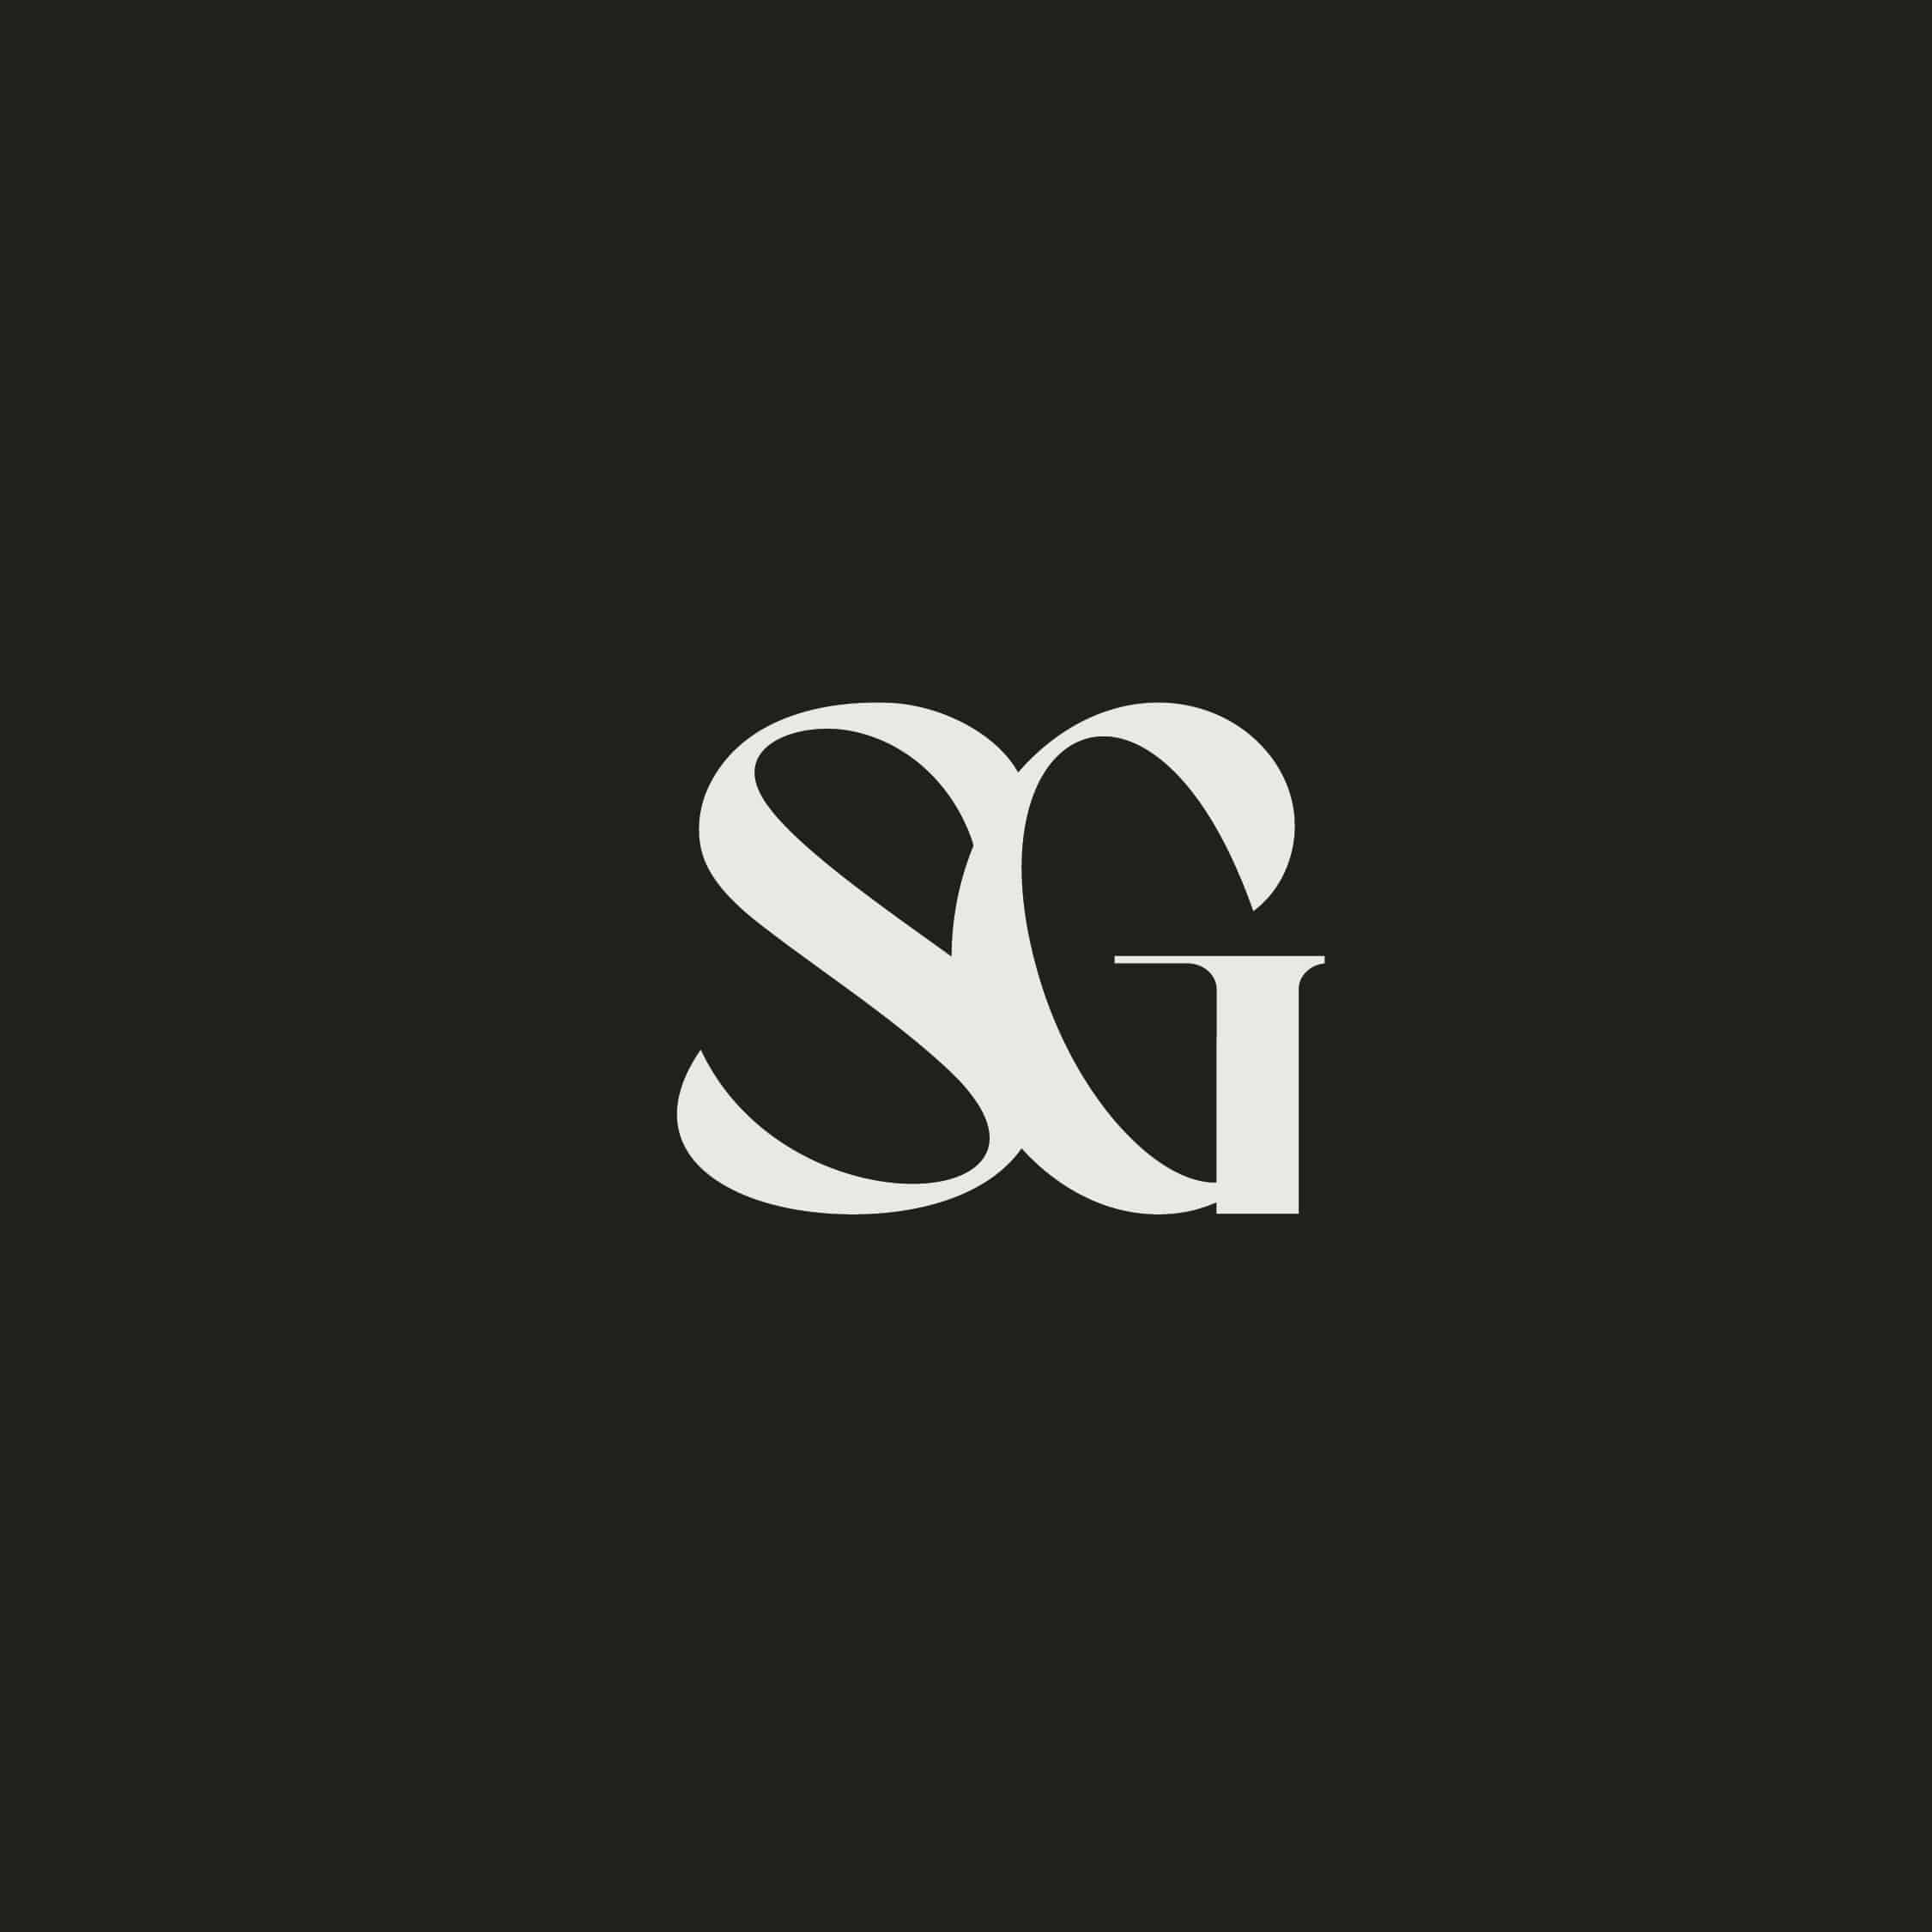 Sage Gracie Logo Design By Stellen Design Branding Agency in Los Angeles California